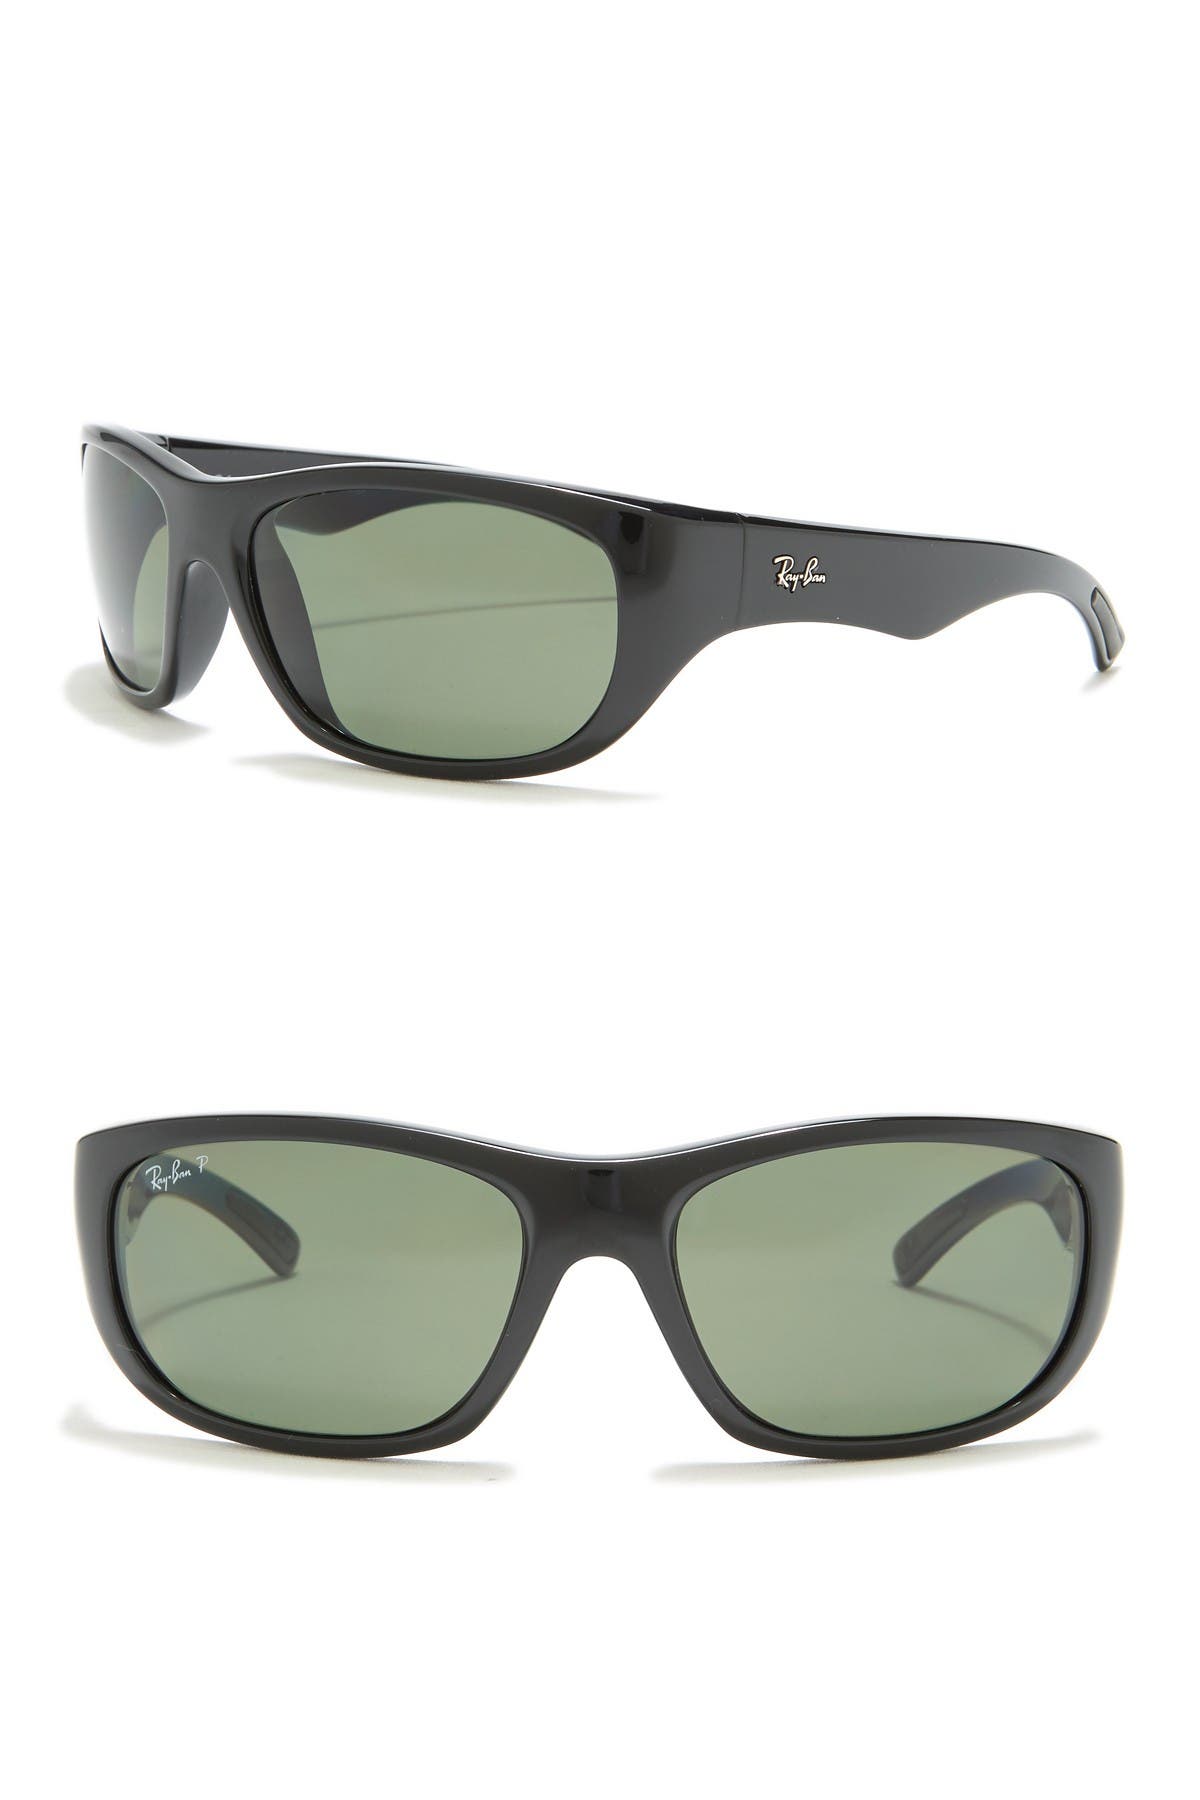 ray ban polarized wrap around sunglasses,cheap - OFF 68%  